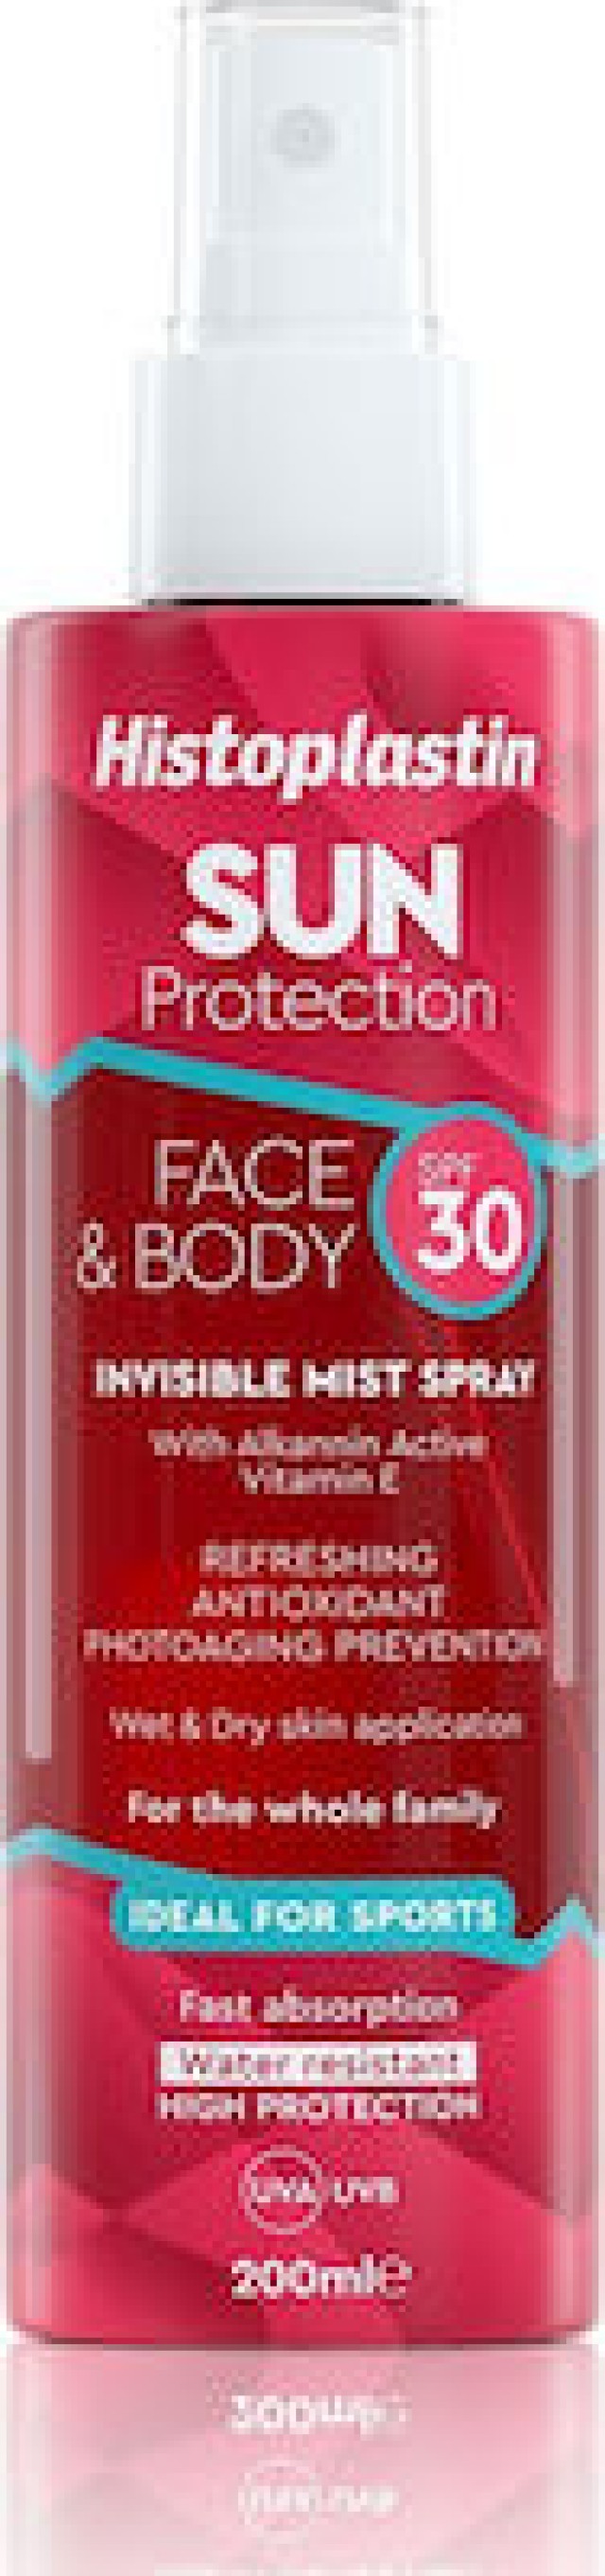 Histoplastin Sun Protection Face & Body Invisible Mist Spray SPF30, 200ml